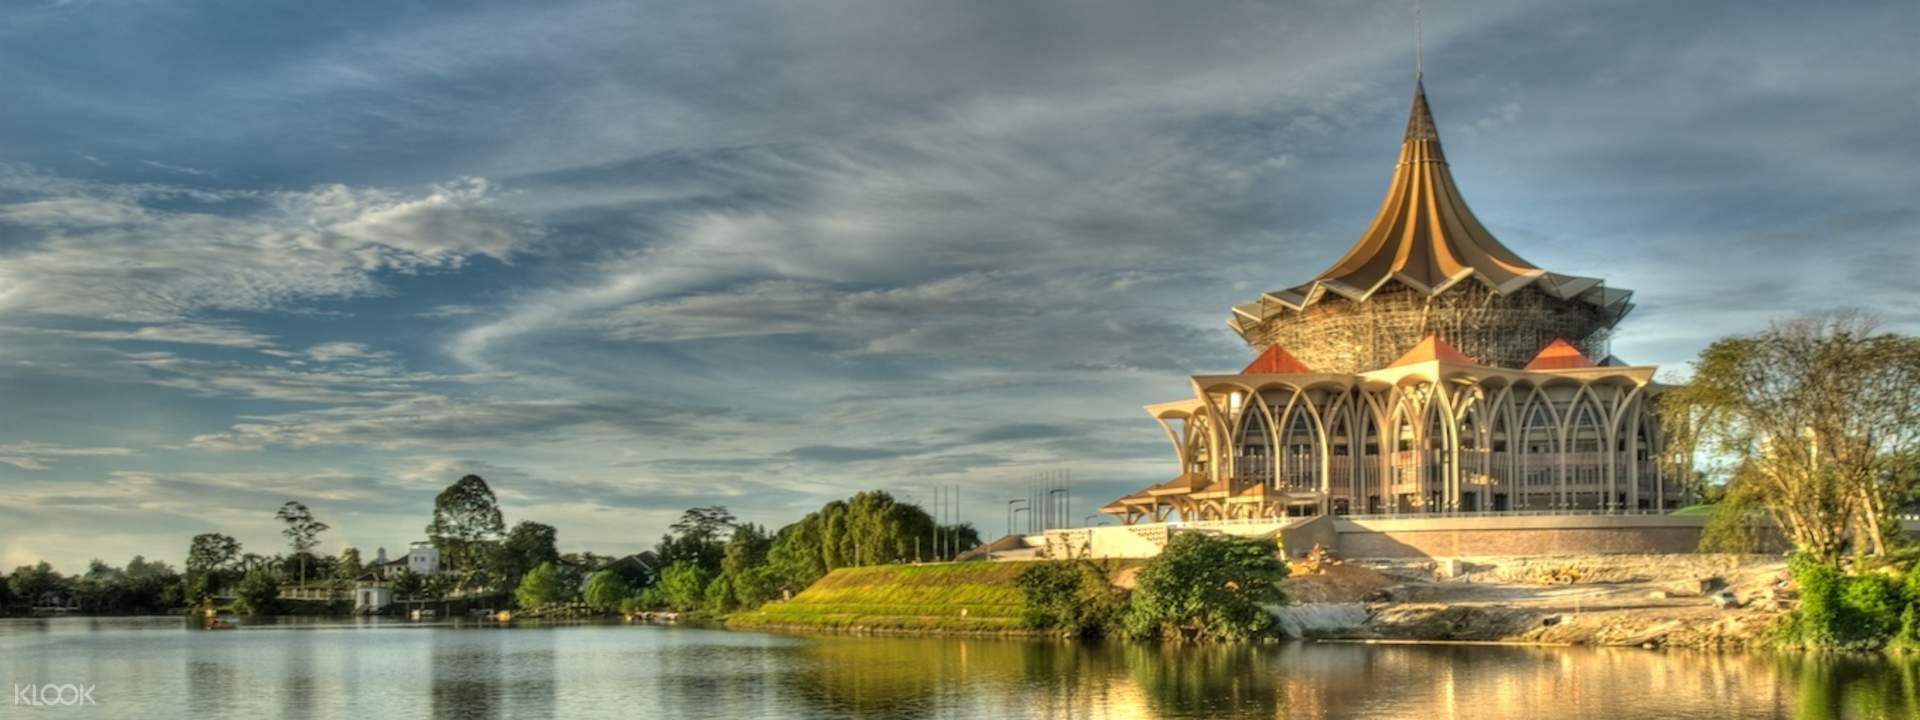 Kuching City dan Sarawak River Half Day Tour, Malaysia- Klook